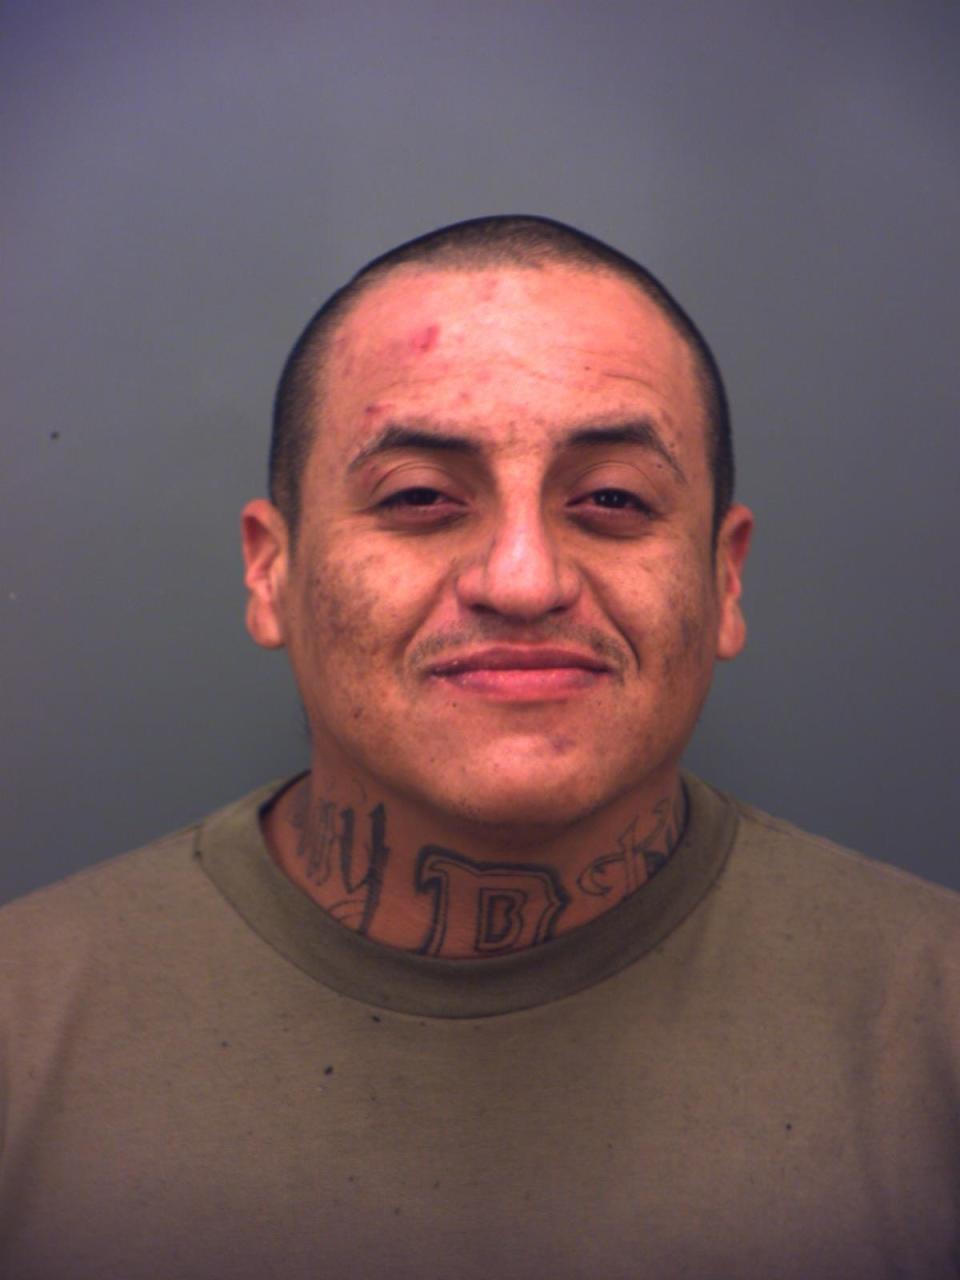 Armando Bejarano, jail booking photo after his arrest on Jan. 4, 2024, by El Paso police.